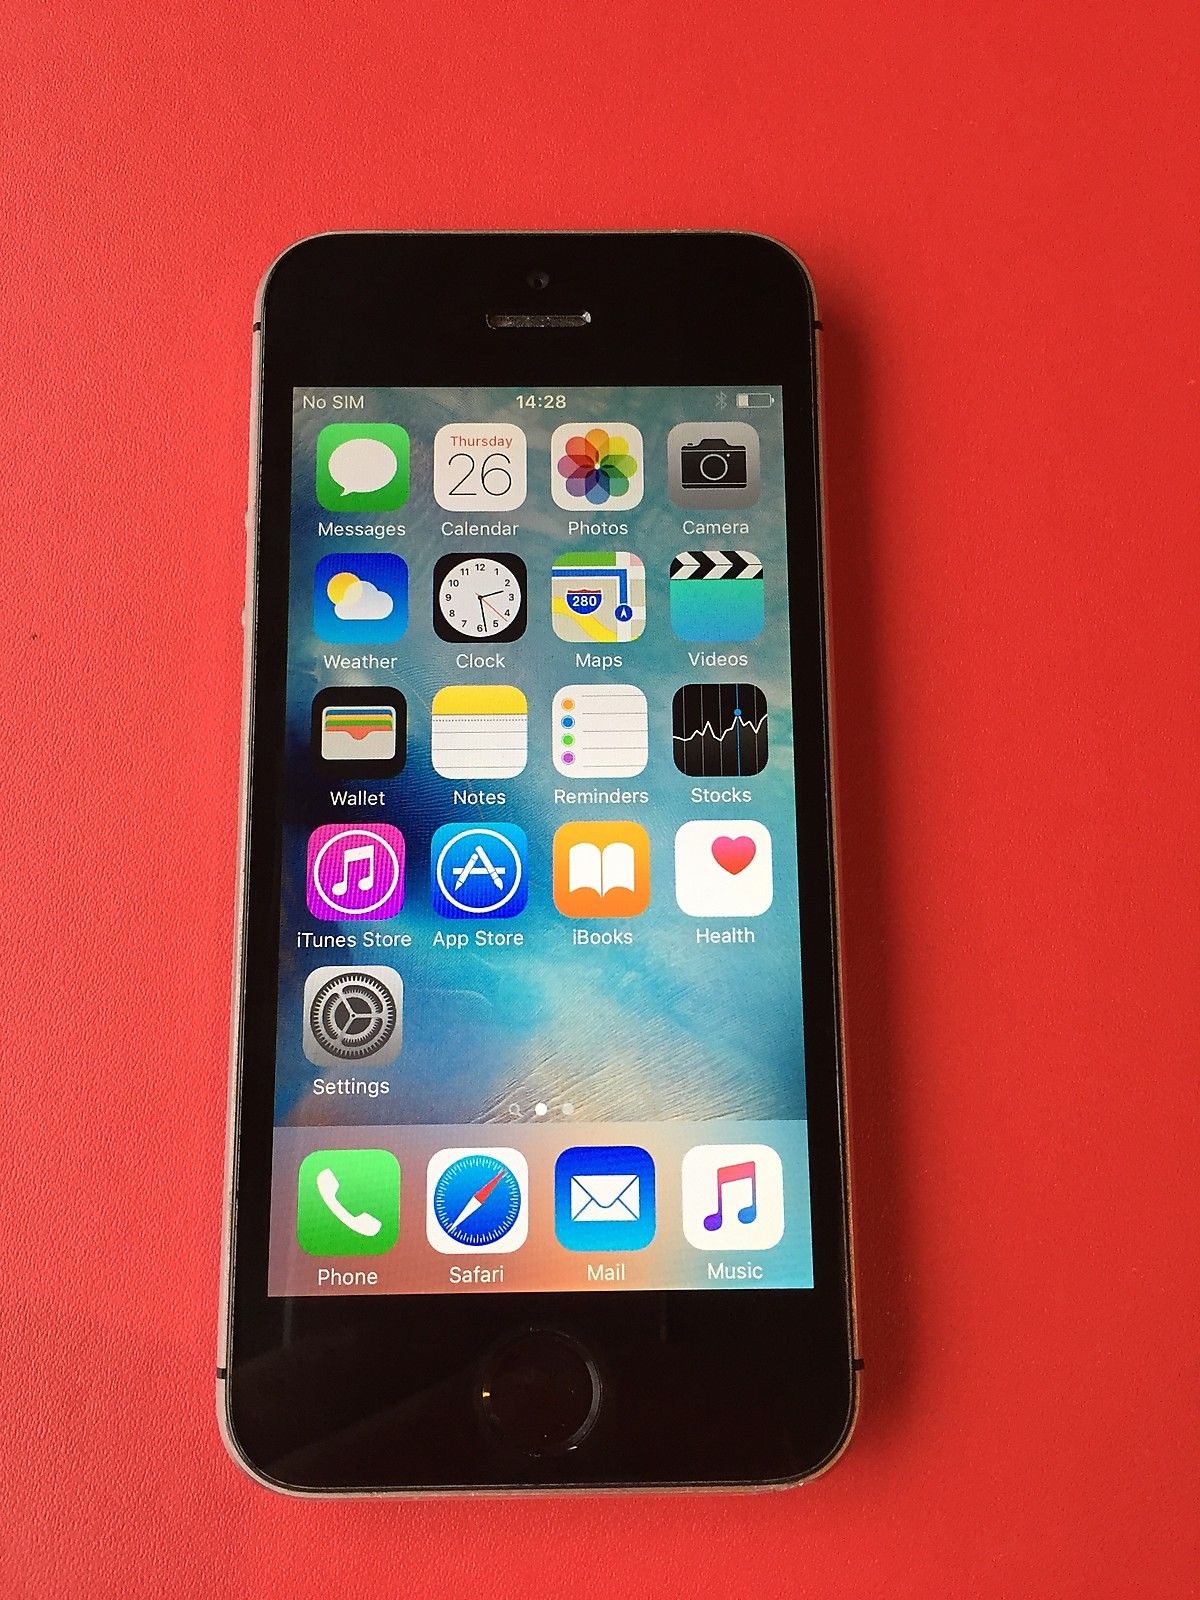 Apple iPhone 5s - 16GB - Space Grey (Unlocked) Smartphone